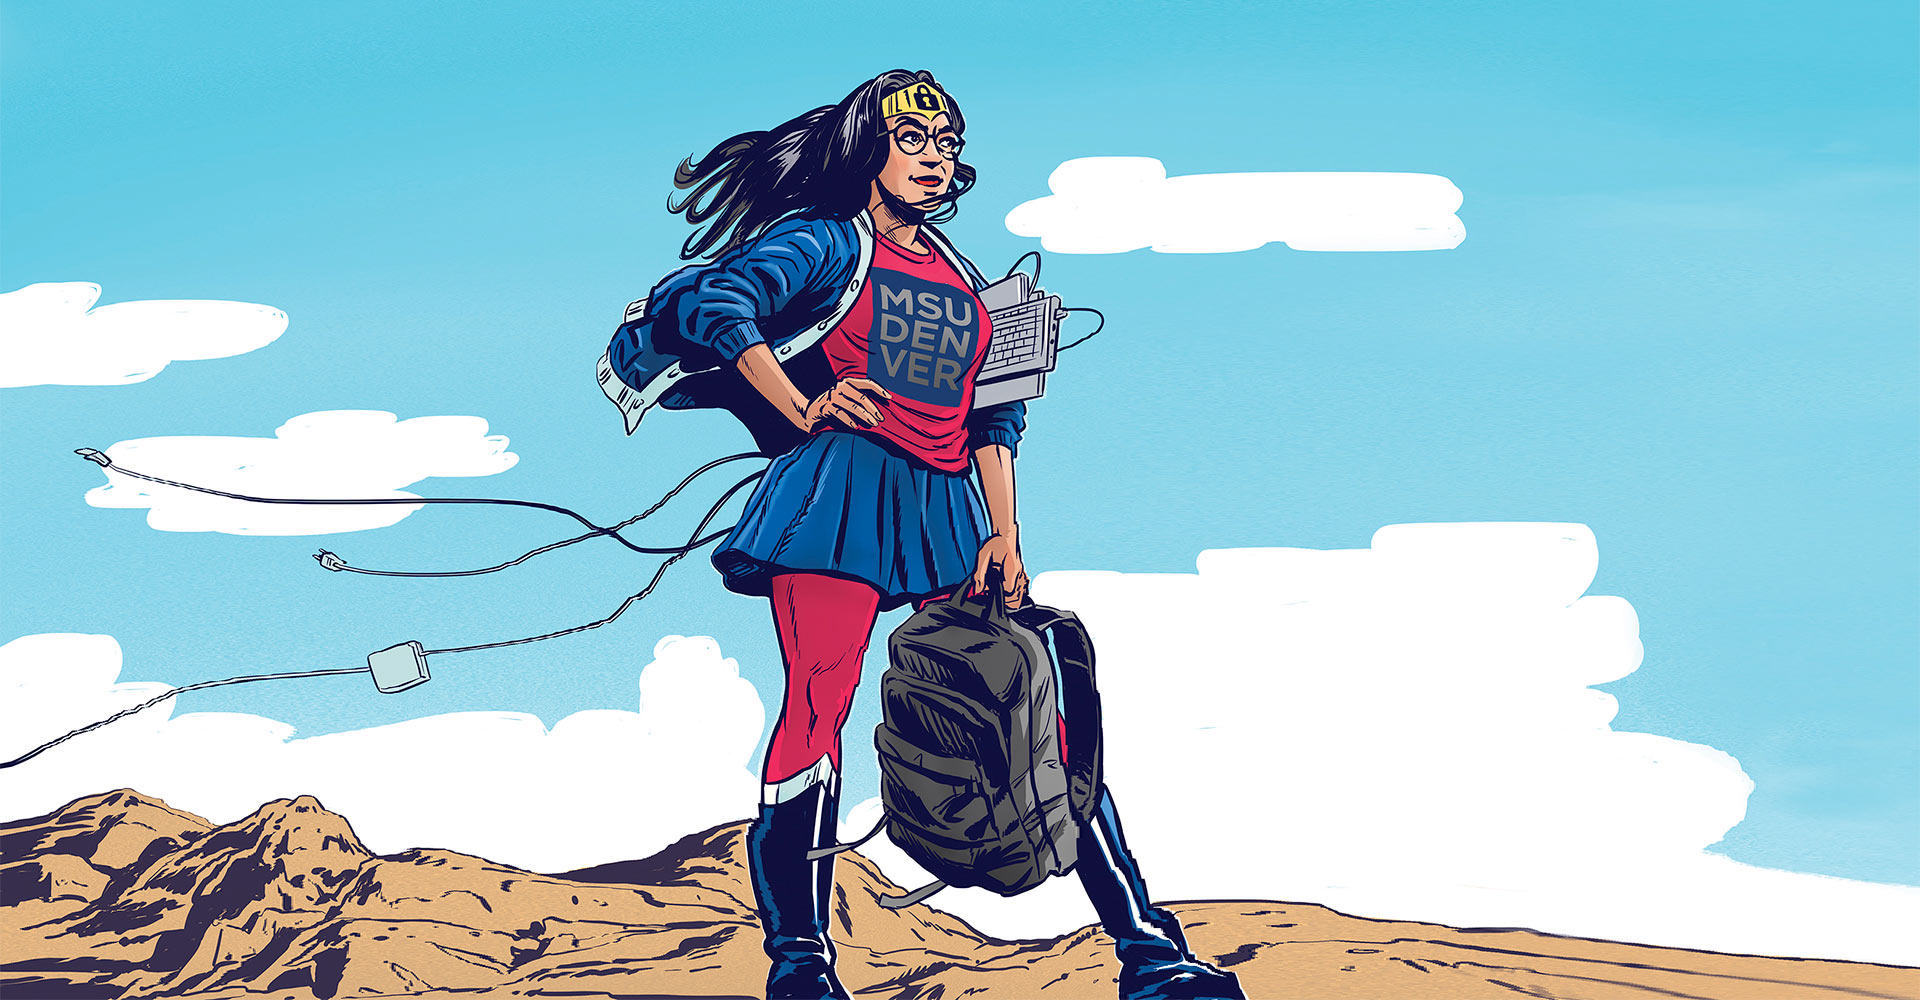 Cartoon image of female superhero holding backpack and keyboard